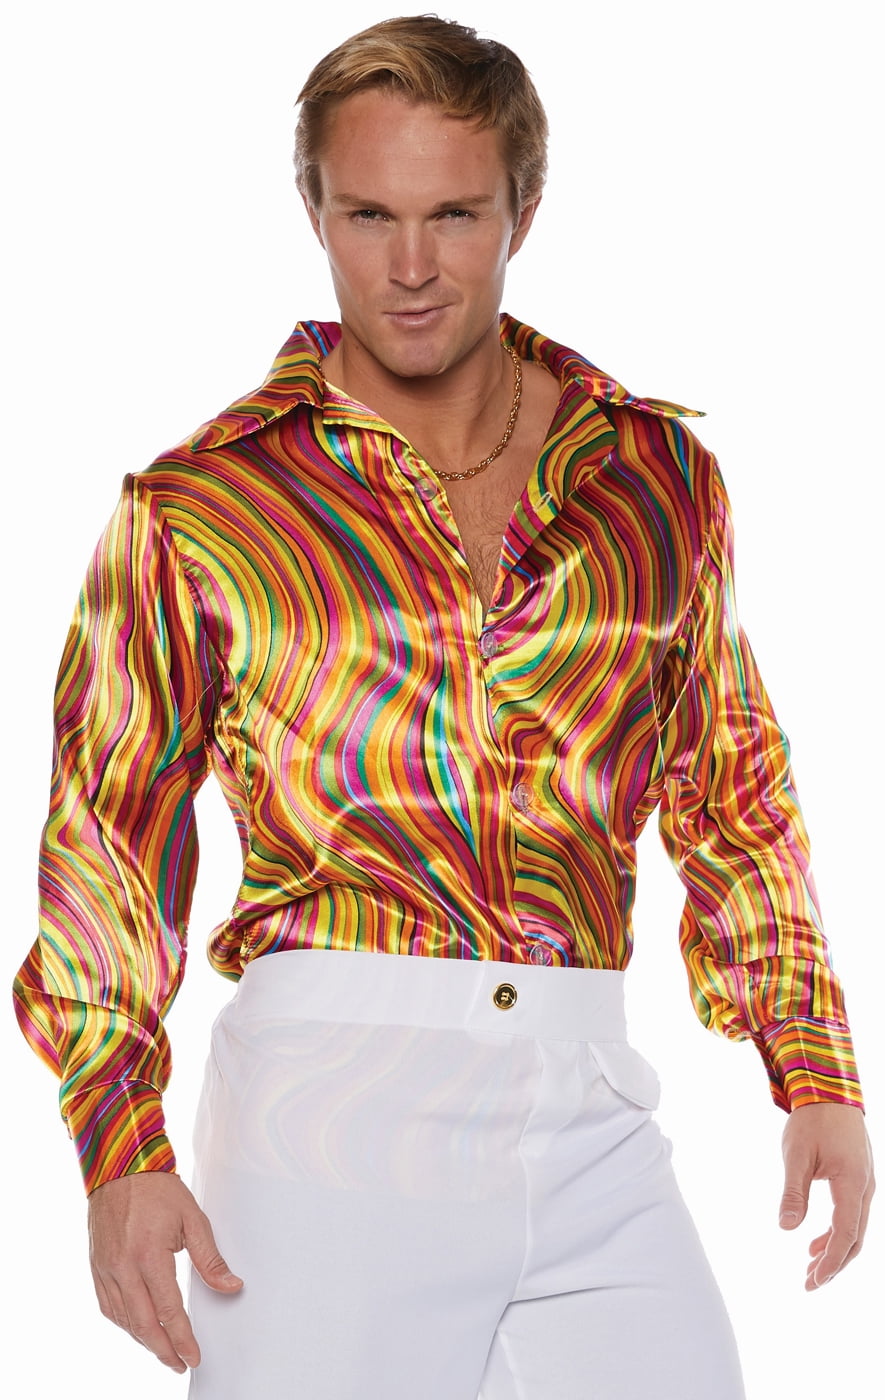 Disco Mens Adult Multi Colored Swirl 70S Costume Accessory Shirt-Xl ...